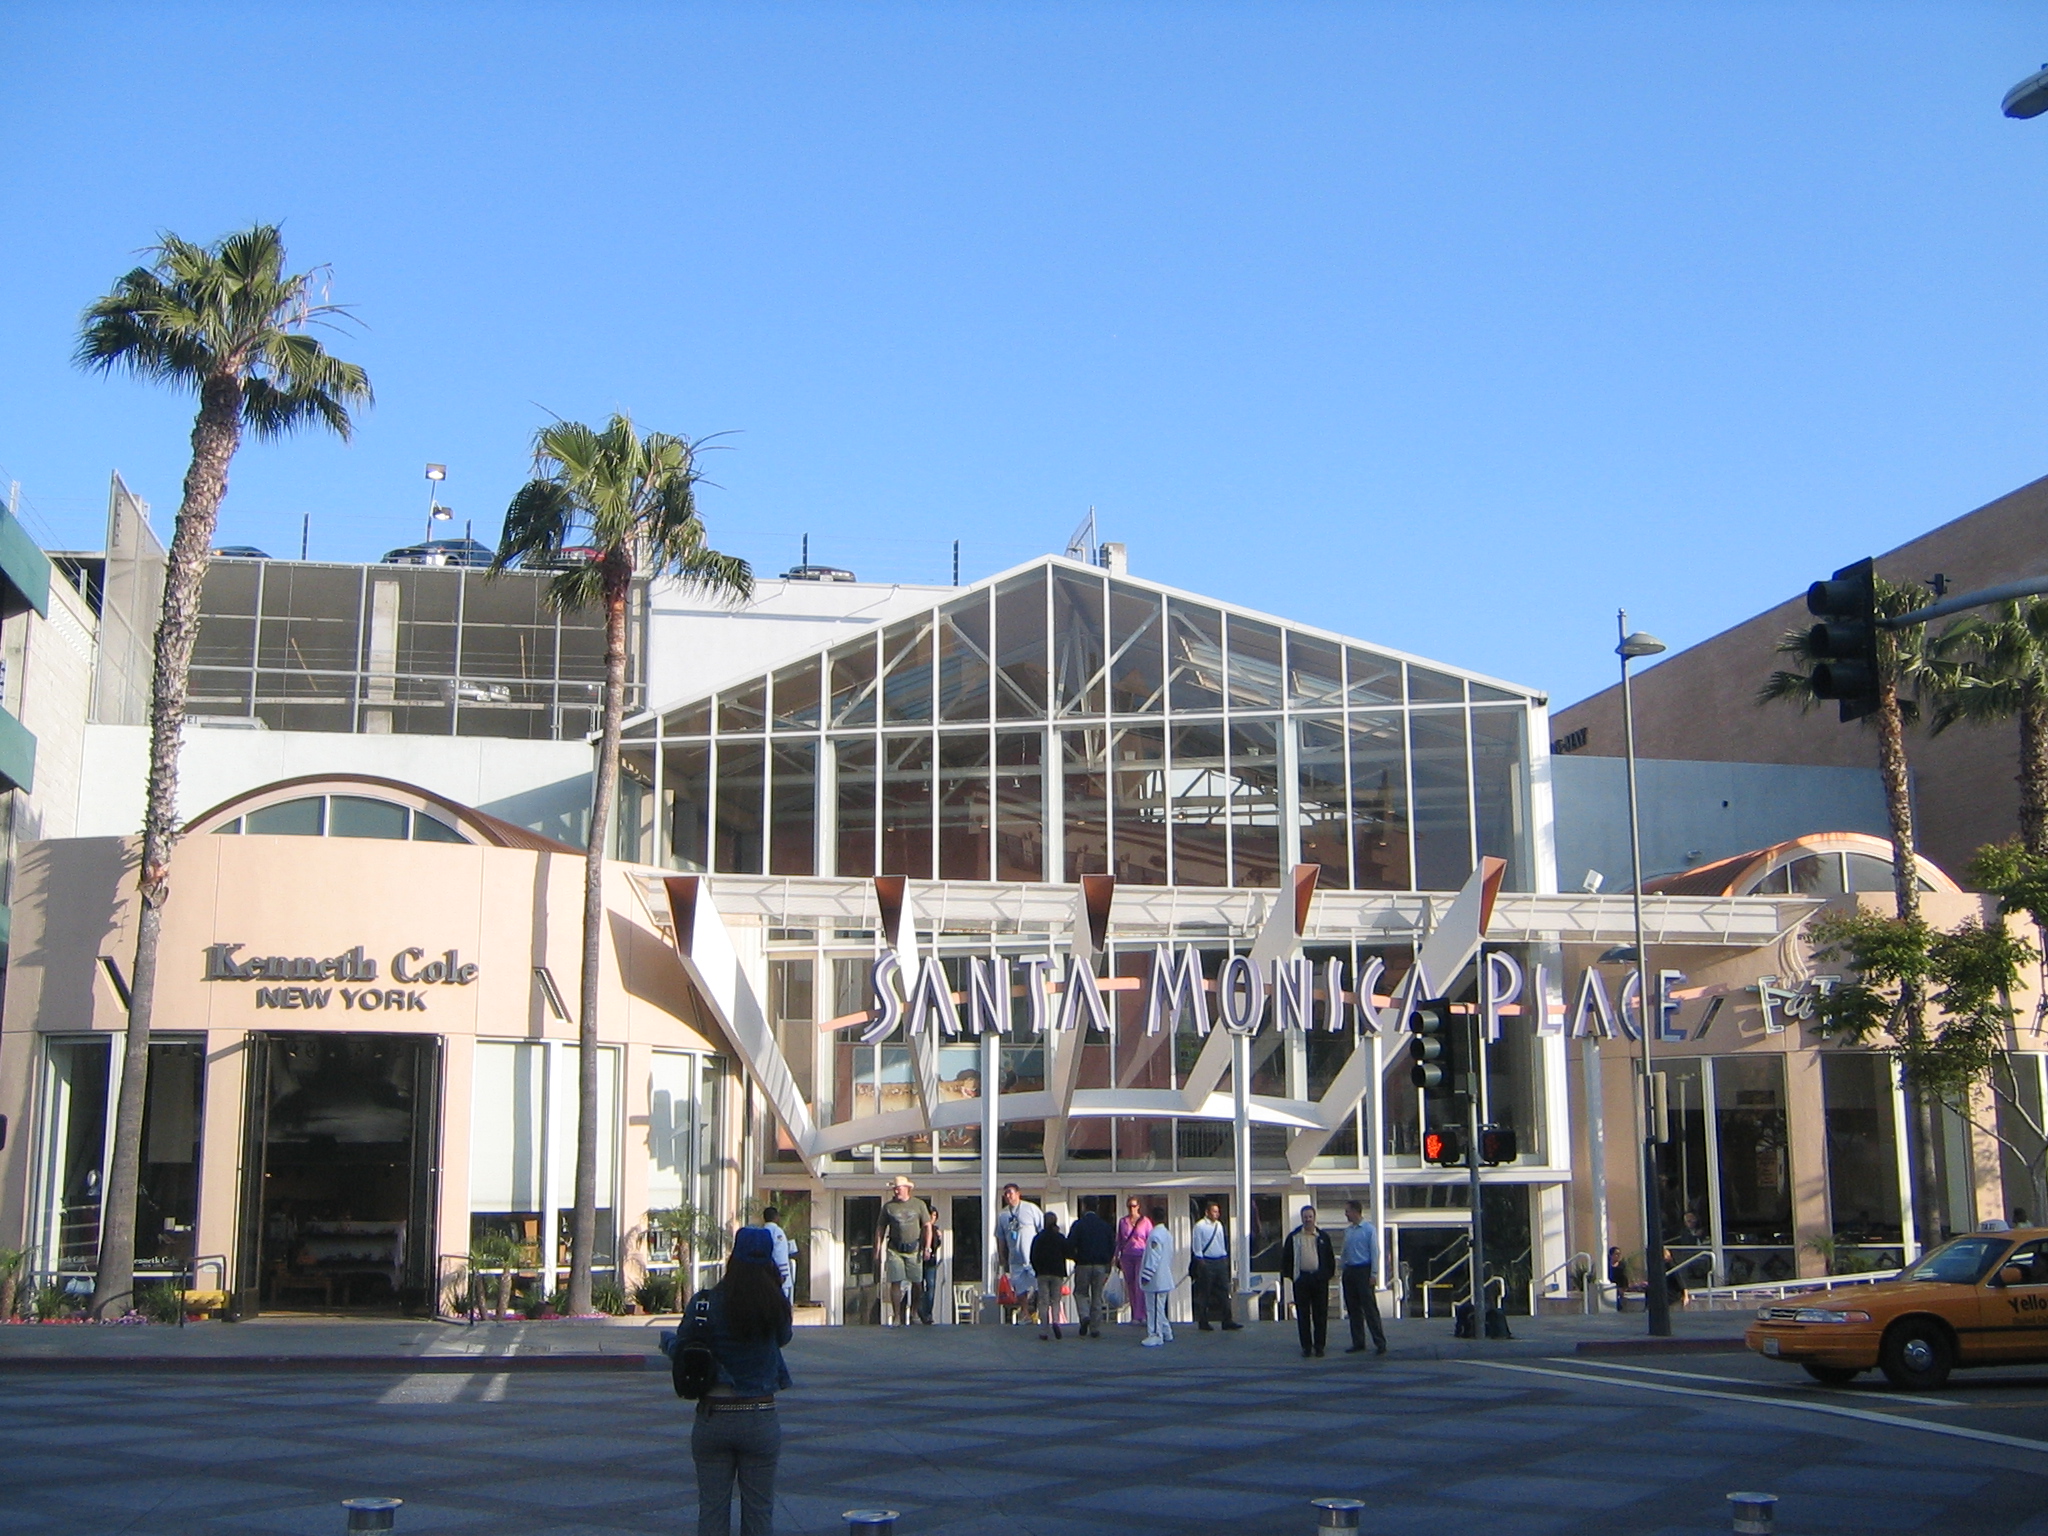 Santa Monica Place - Wikipedia